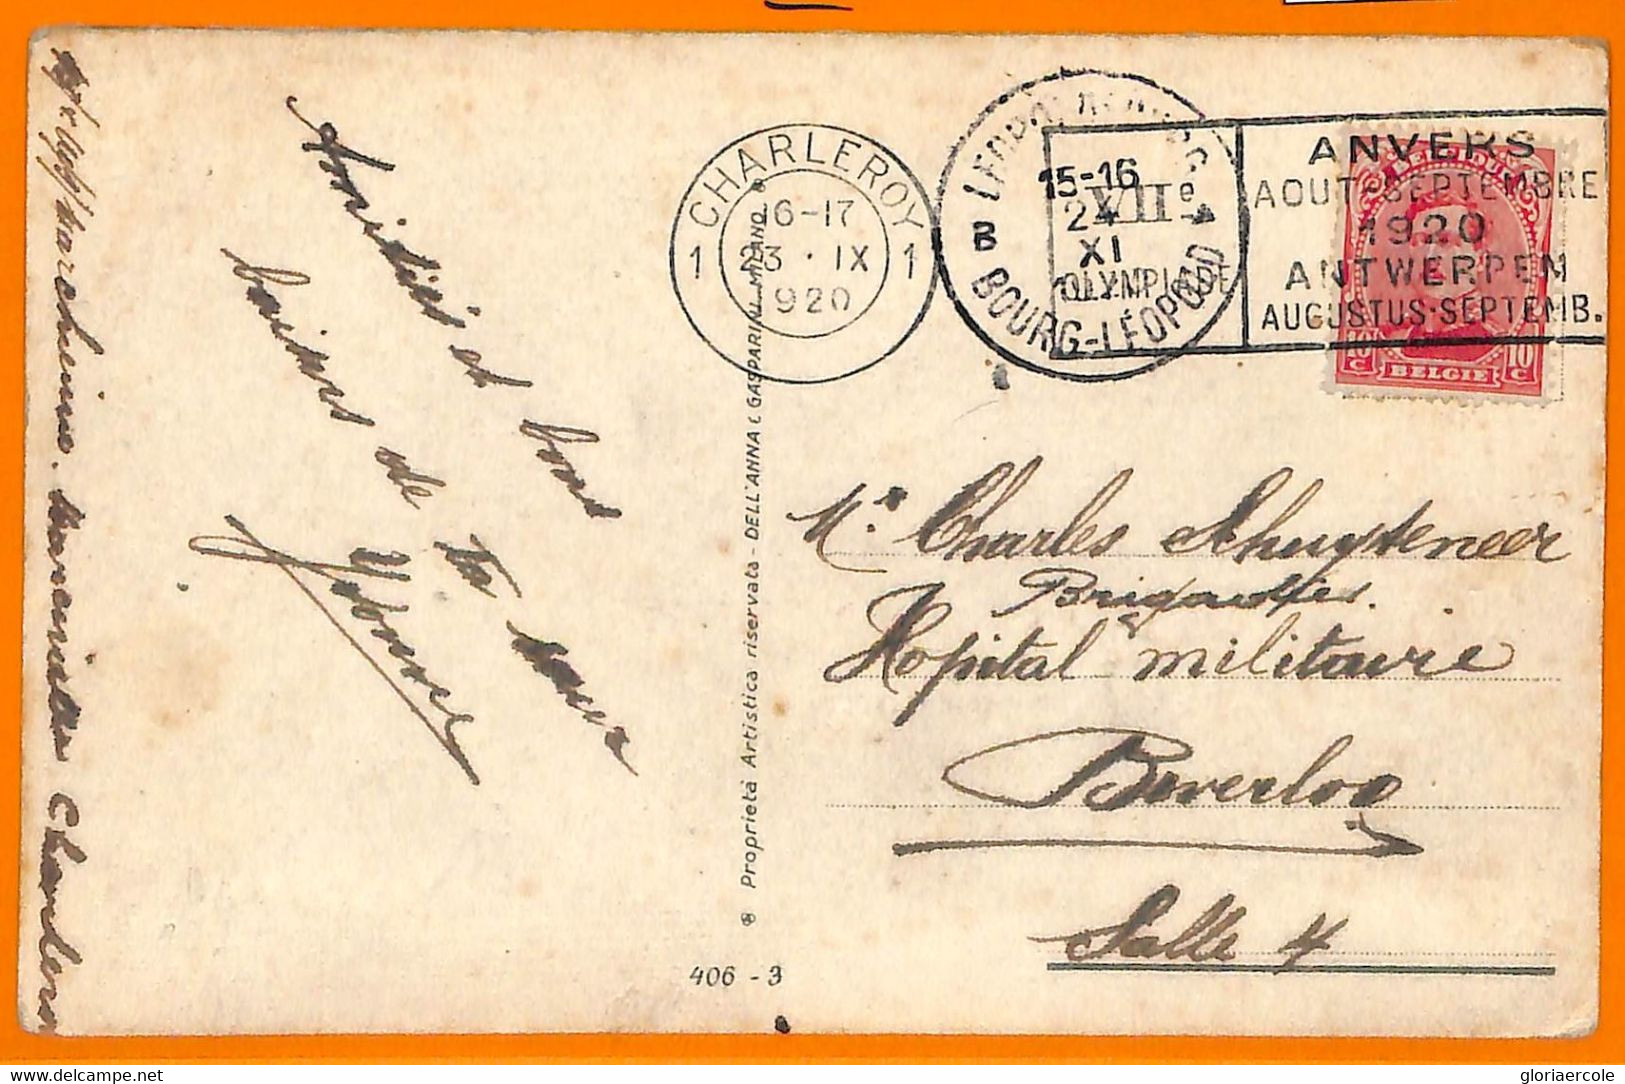 Aa2941 - BELGIUM - POSTAL HISTORY - 1920 Olympic Games Postmark: CHARLEROI - Estate 1920: Anversa